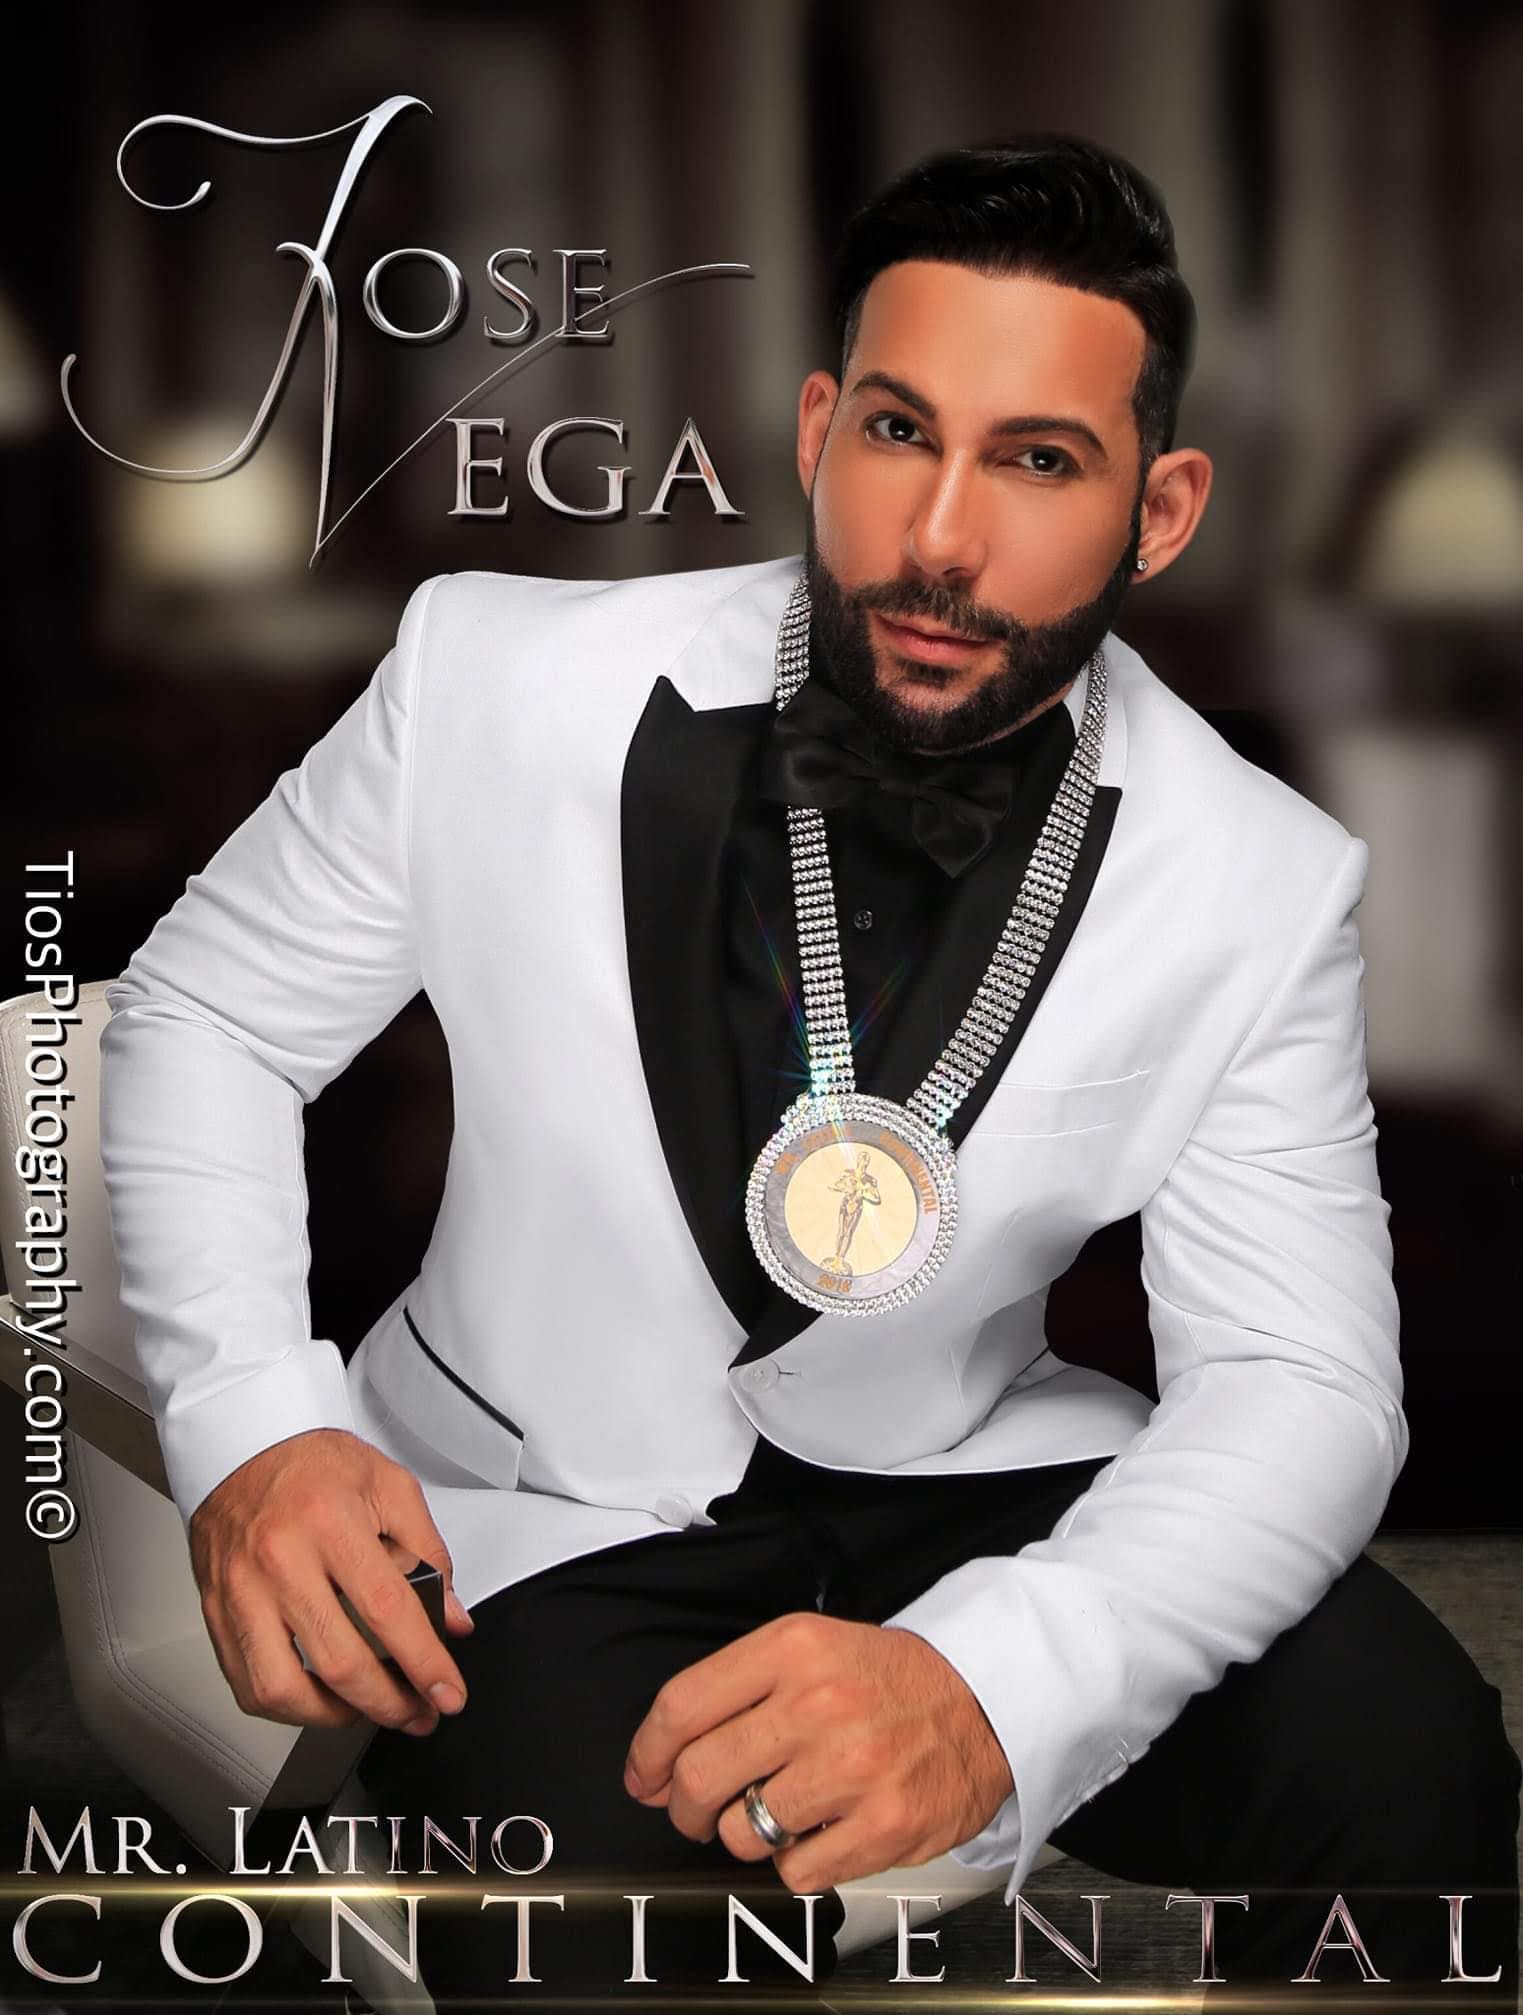 Jose Vega - Photo by Tios Photography